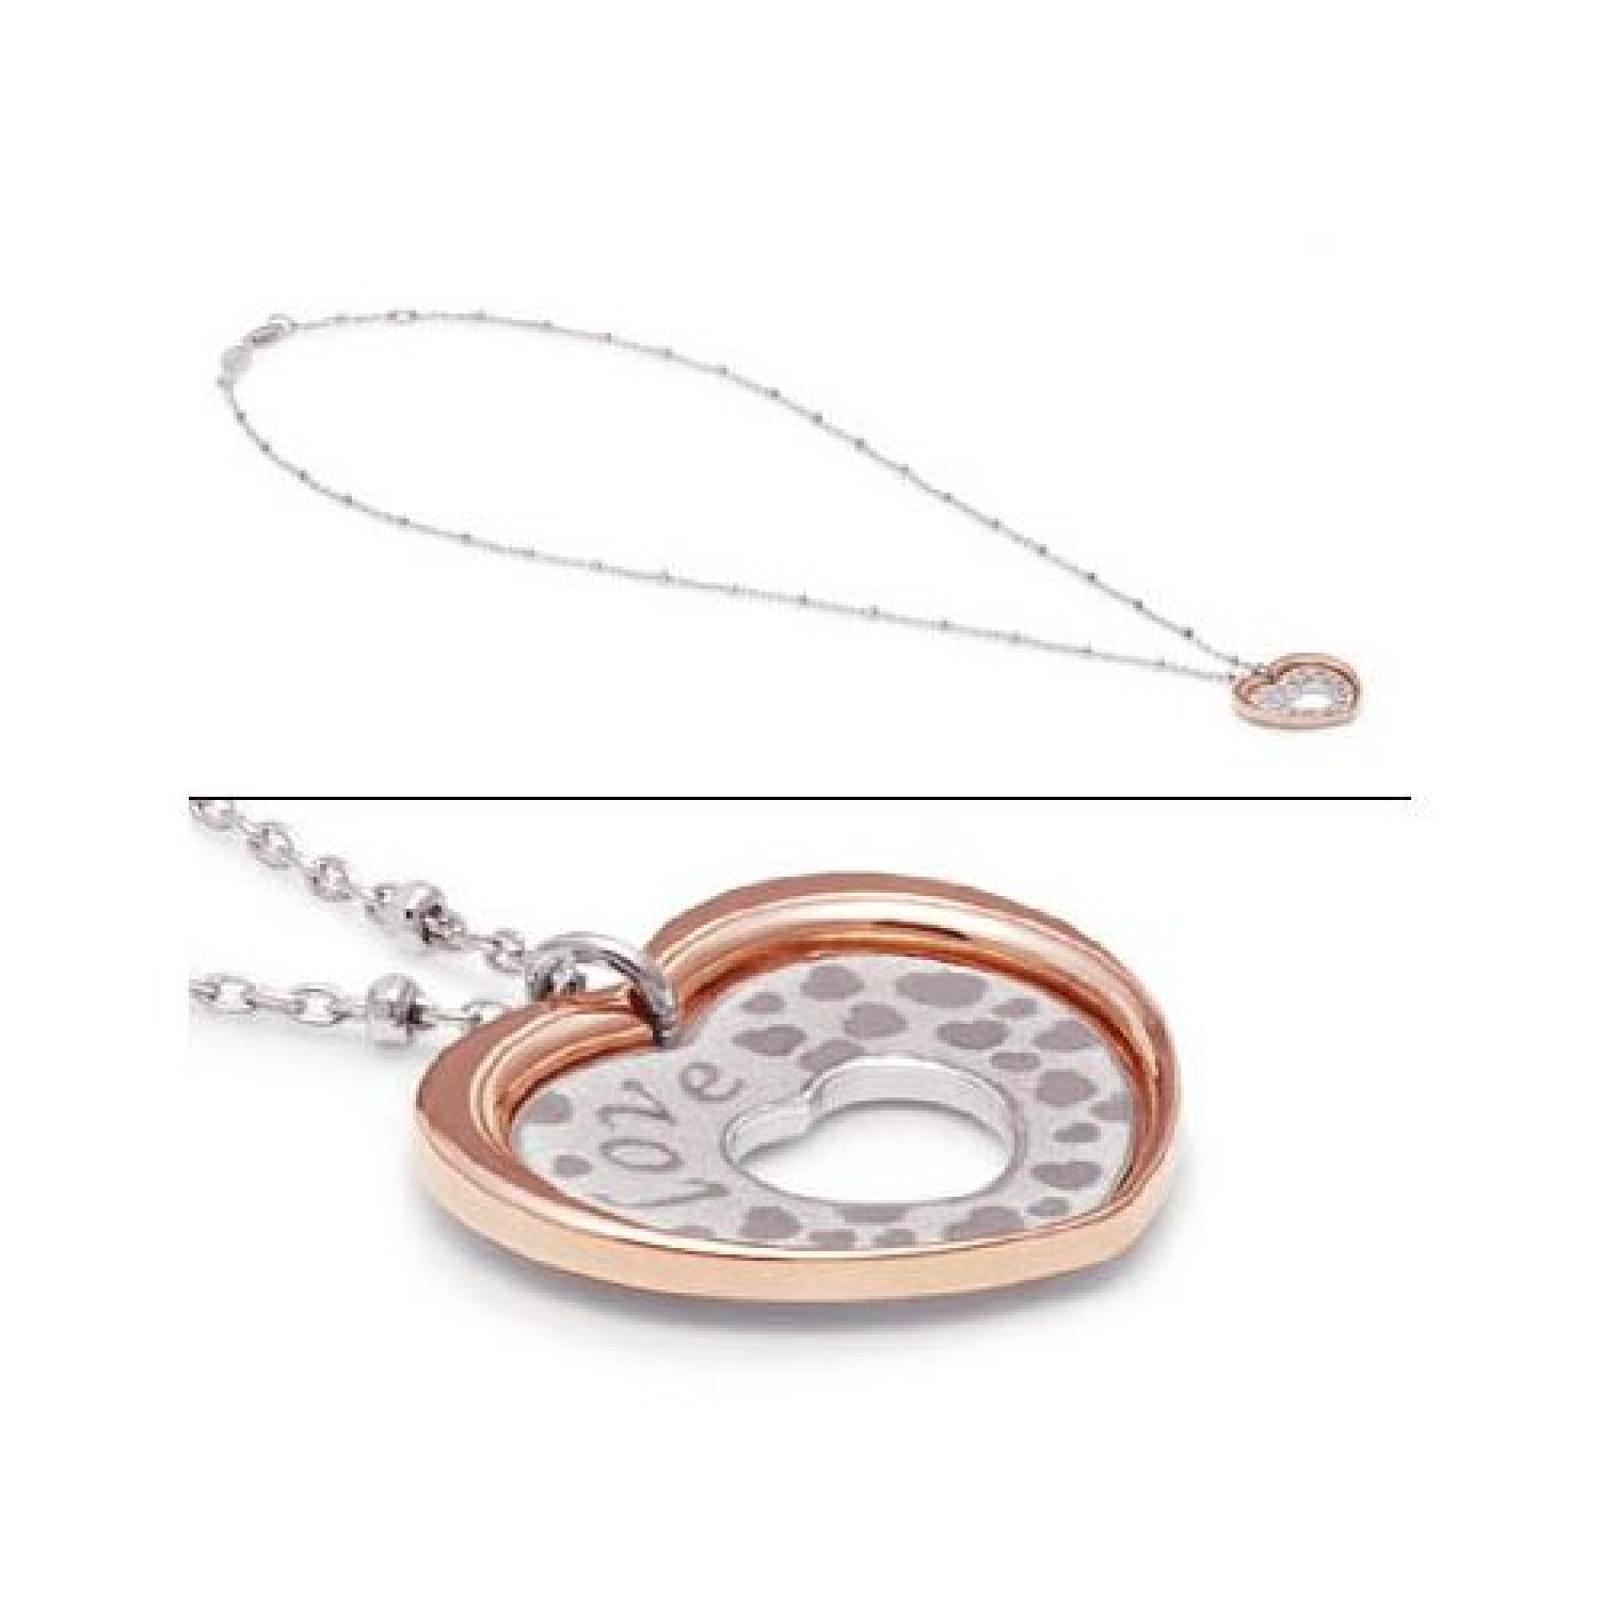 Nomination INCANTO Pendant (HEART) in silver 925 (Heart) 142020-005 